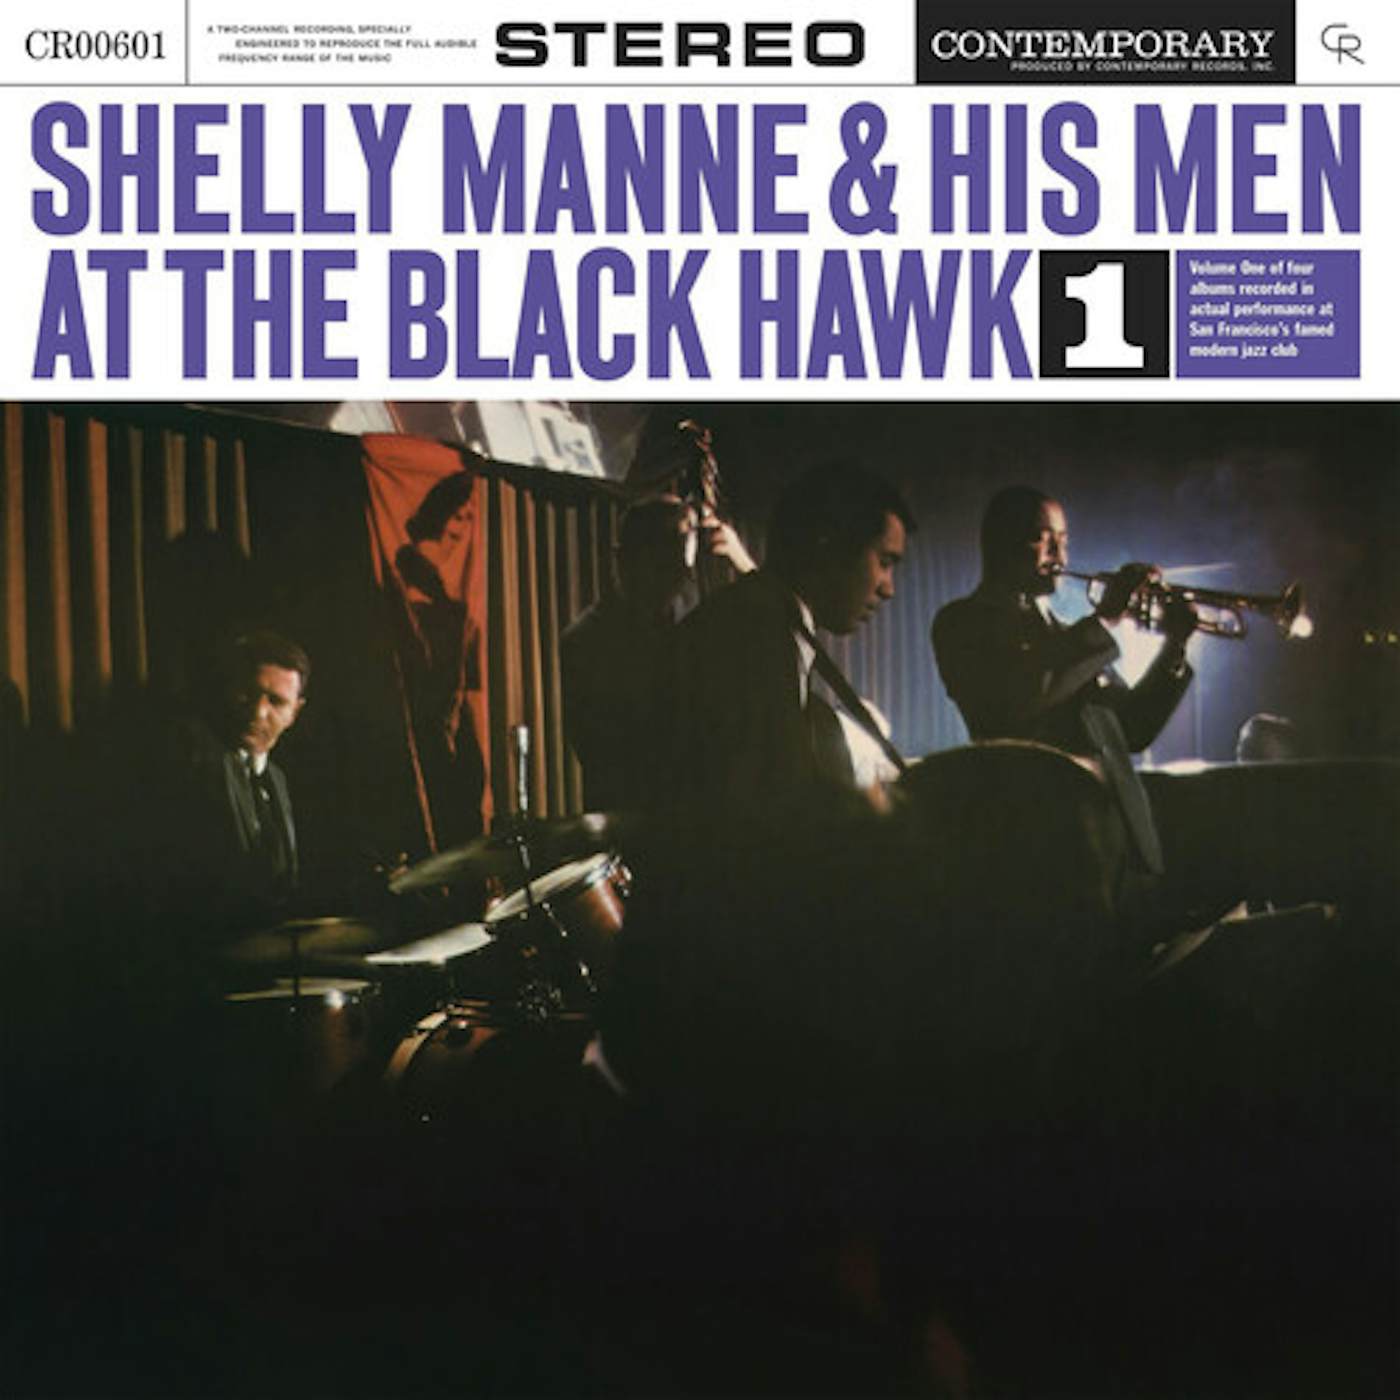 Shelly Manne & His Men At The Black Hawk, Vol. 1 (Contemporary Records) Vinyl Record